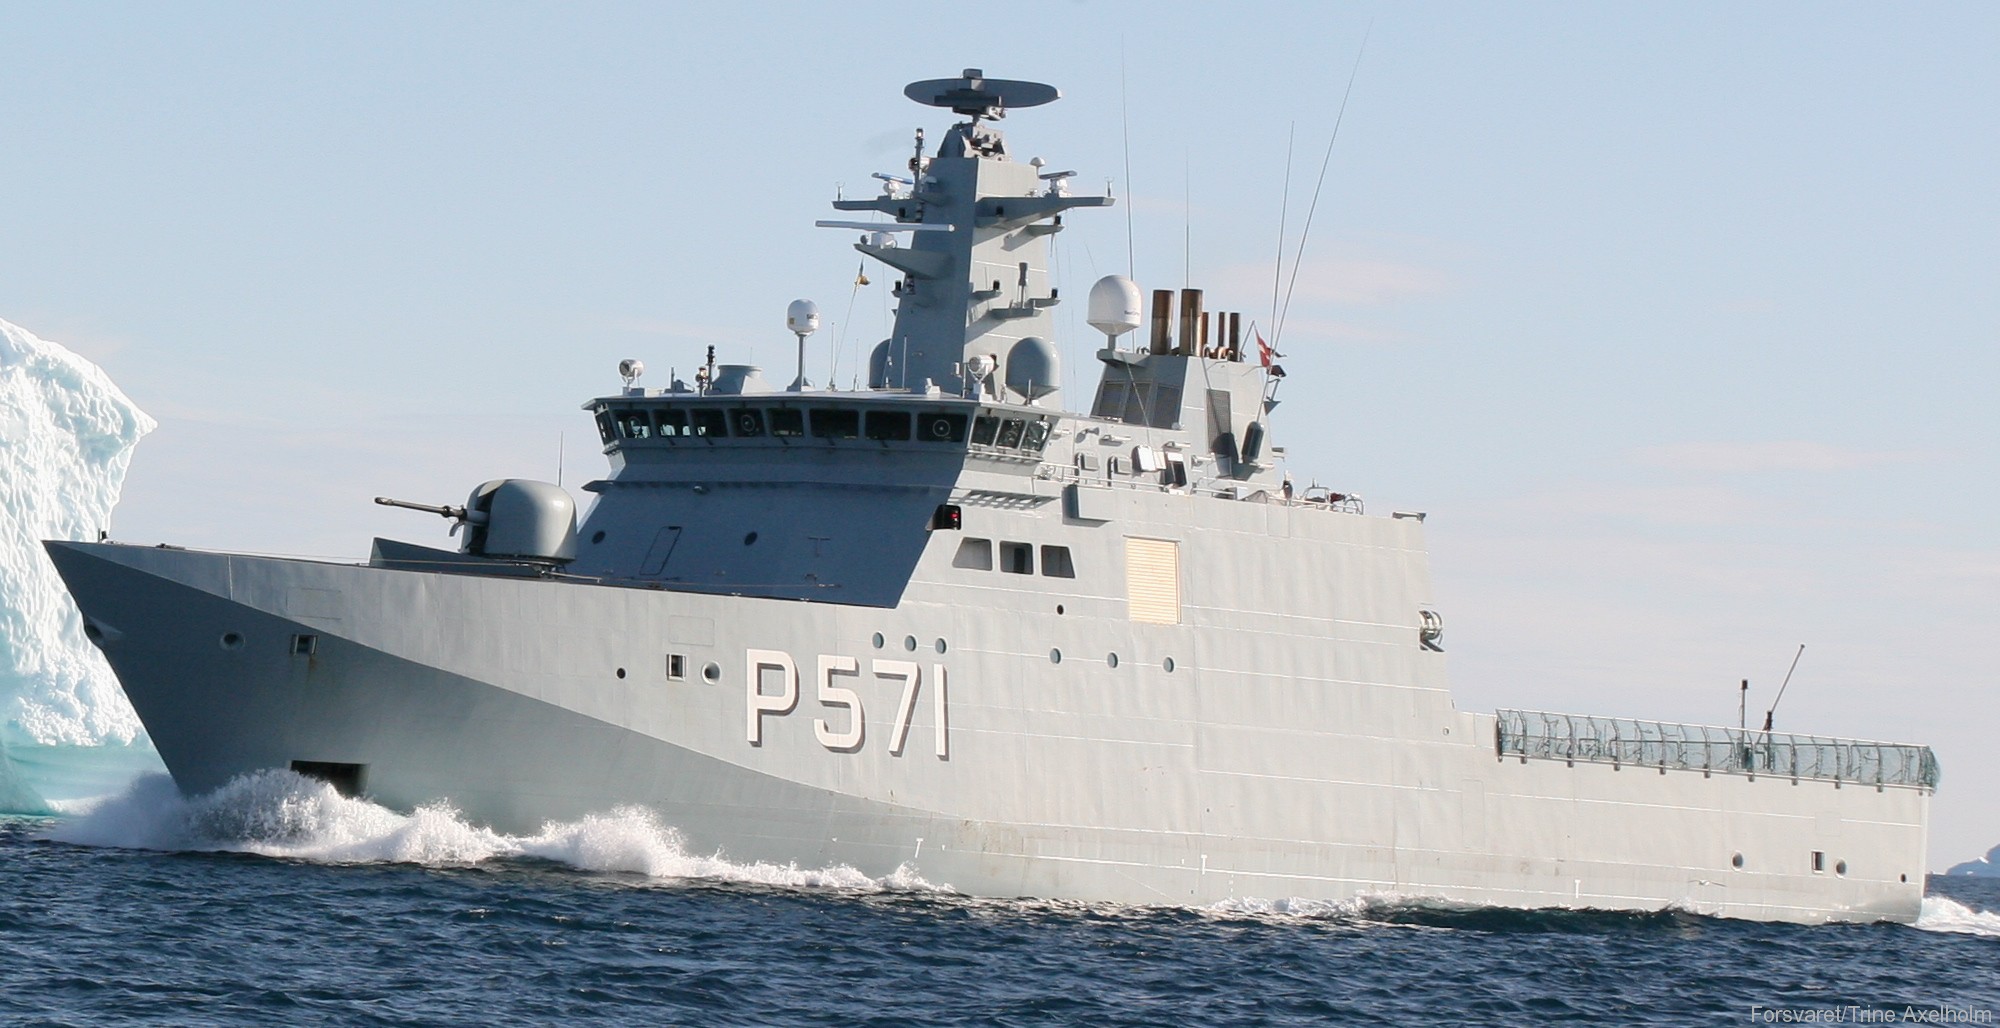 p-571 hdms ejnar mikkelsen knud rasmussen class offshore patrol vessel opv royal danish navy inspektionsfartøj 24